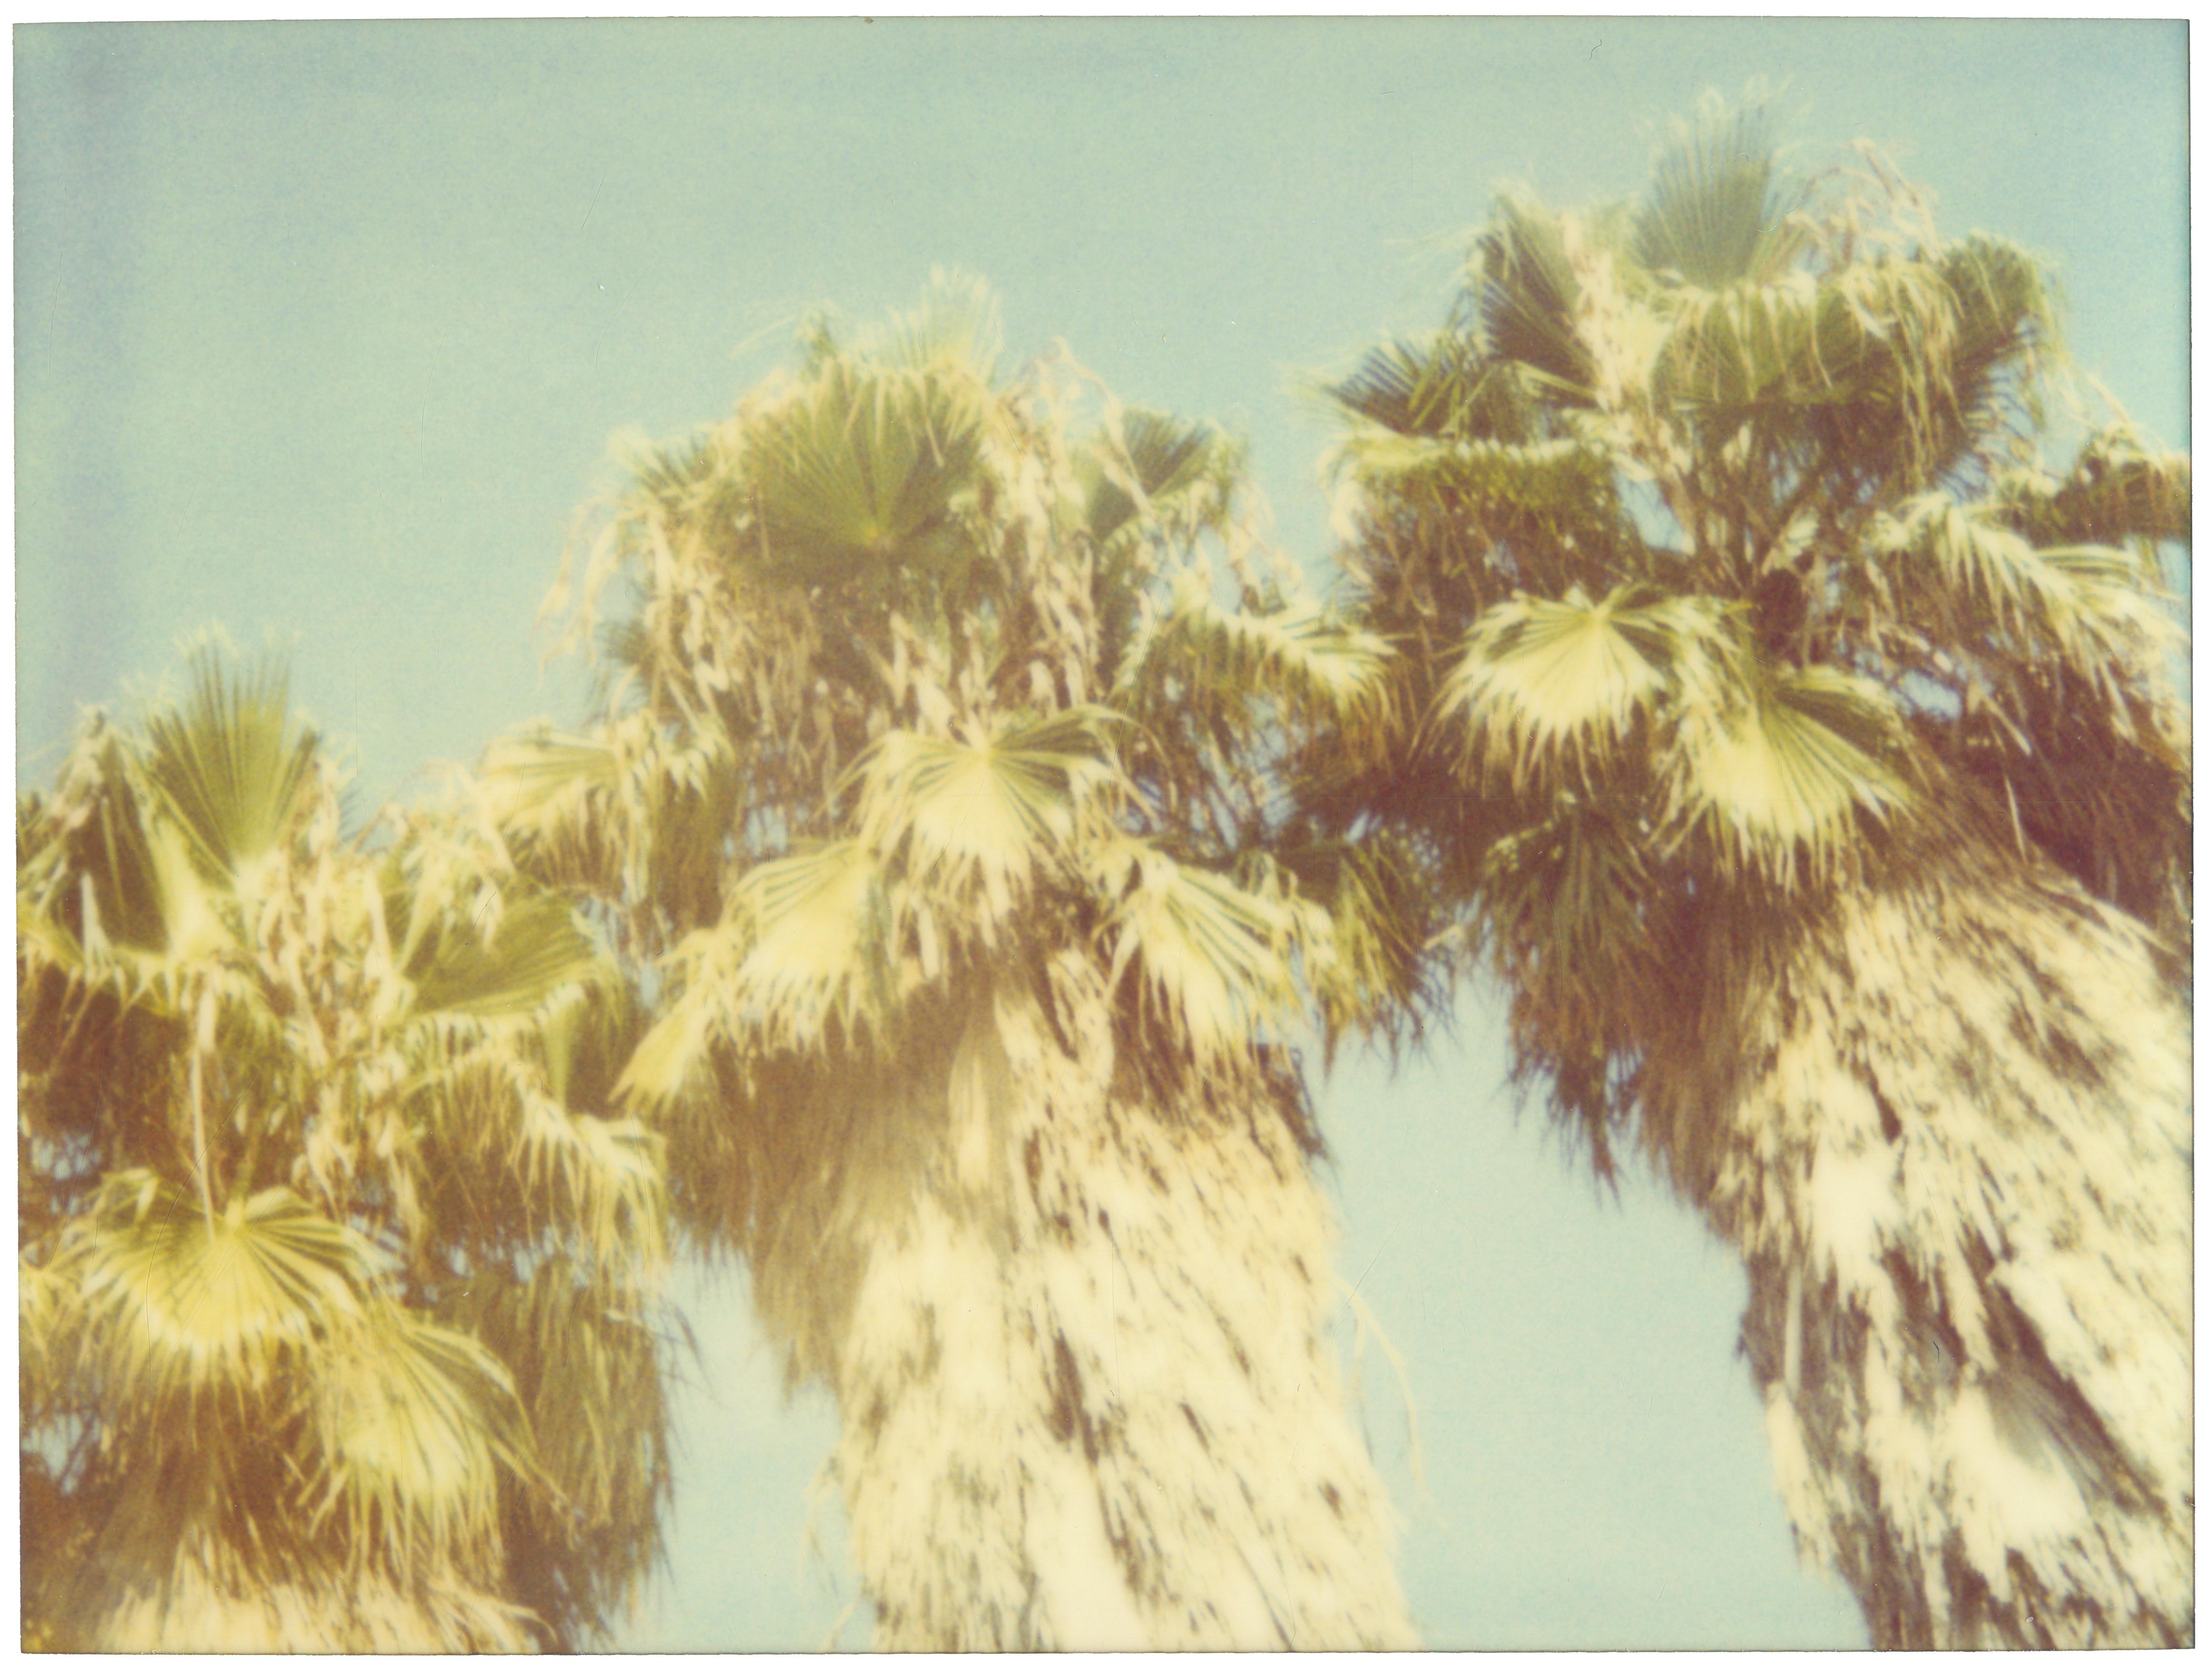 Stefanie Schneider Portrait Photograph - Palm Trees Dive by (Stranger than Paradise) - analog